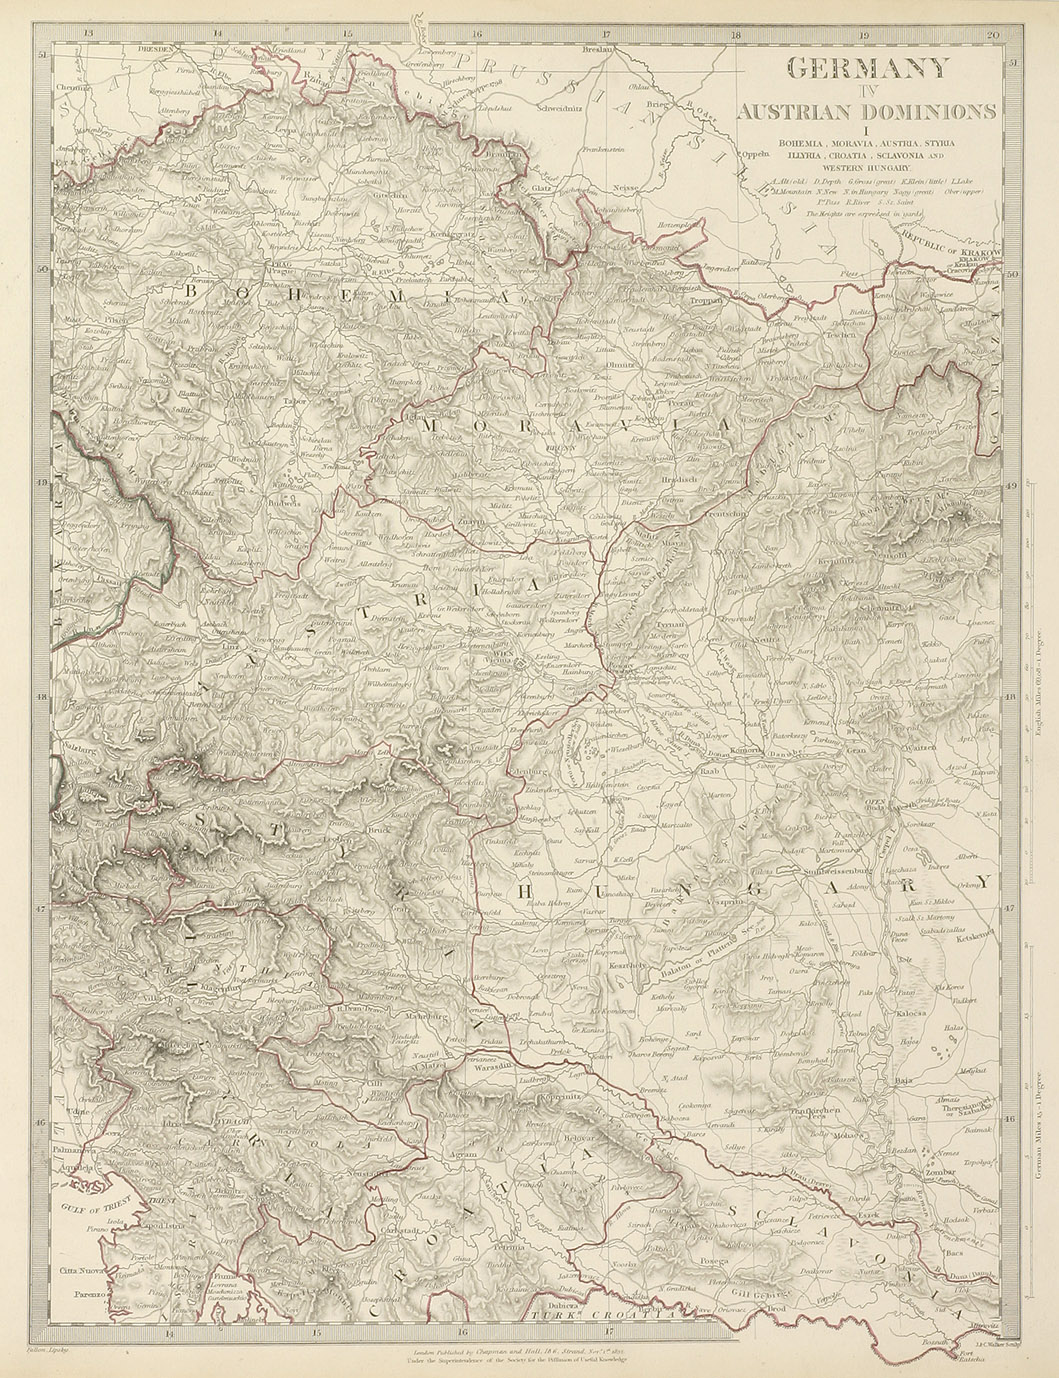 Germany IV Austrian Dominions I Bohemia, Morvia, Austria, Styria, Illyria, Crotia, Sclavonia and Western Hungary. - Antique Map from 1832